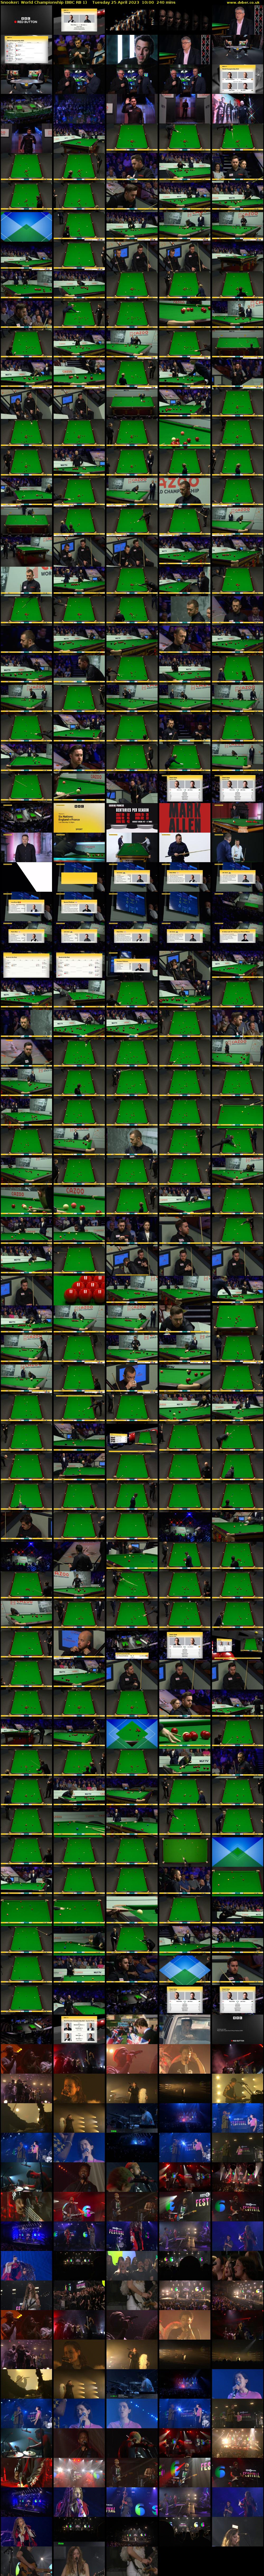 Snooker: World Championship (BBC RB 1) Tuesday 25 April 2023 10:00 - 14:00